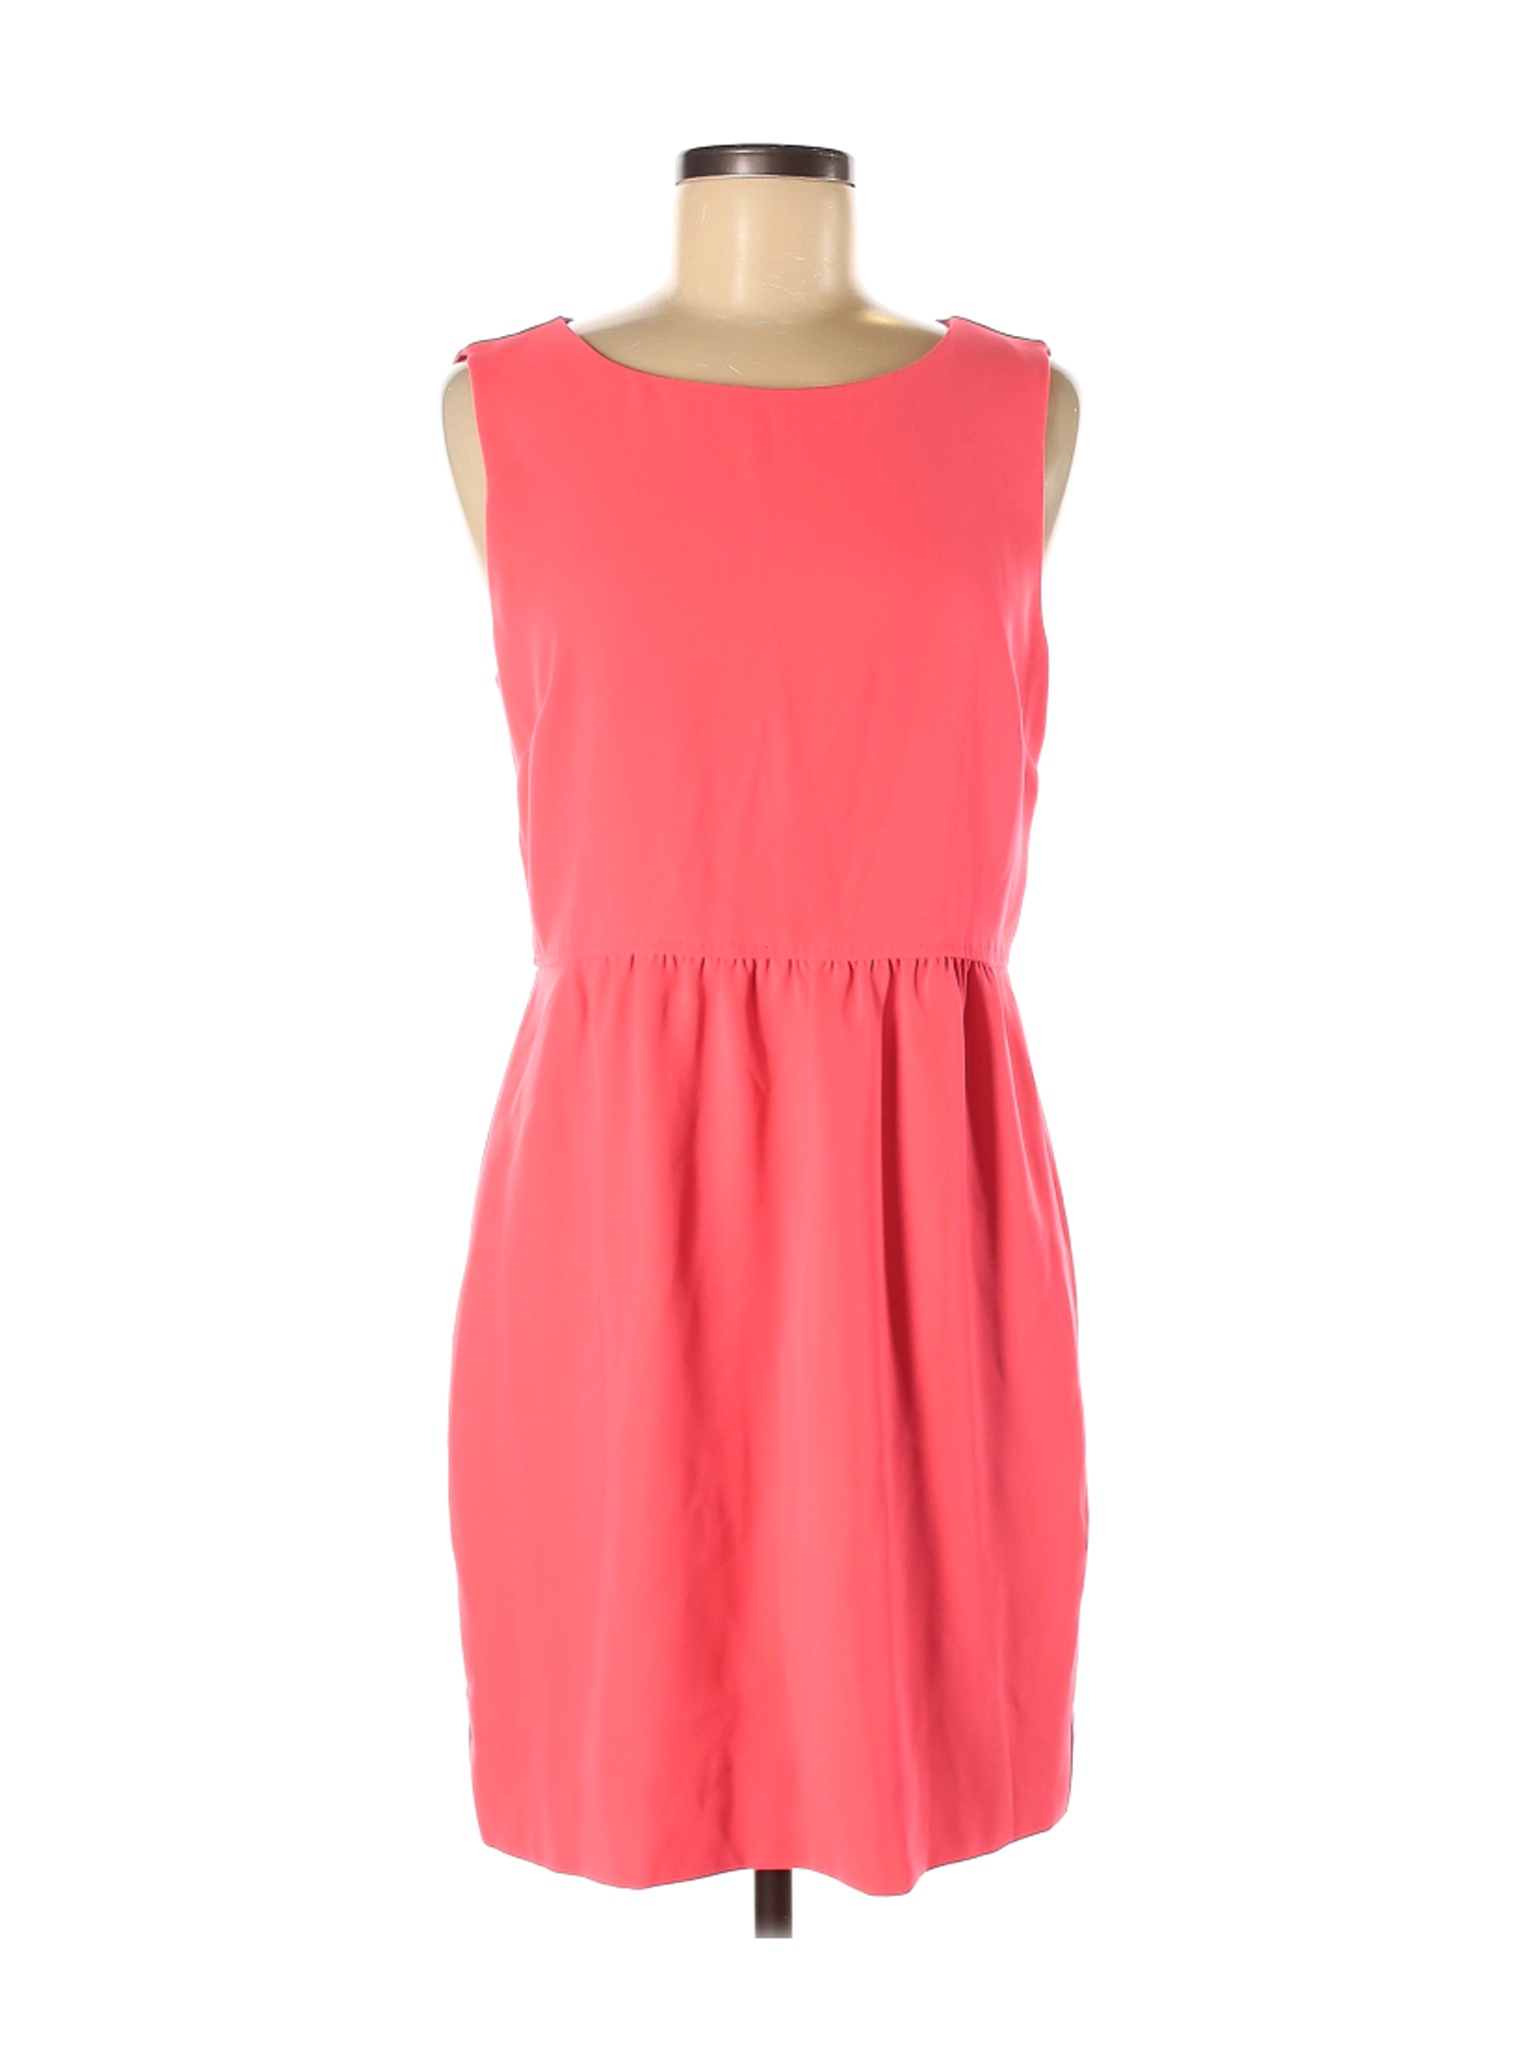 J.Crew Women Pink Casual Dress 8 | eBay